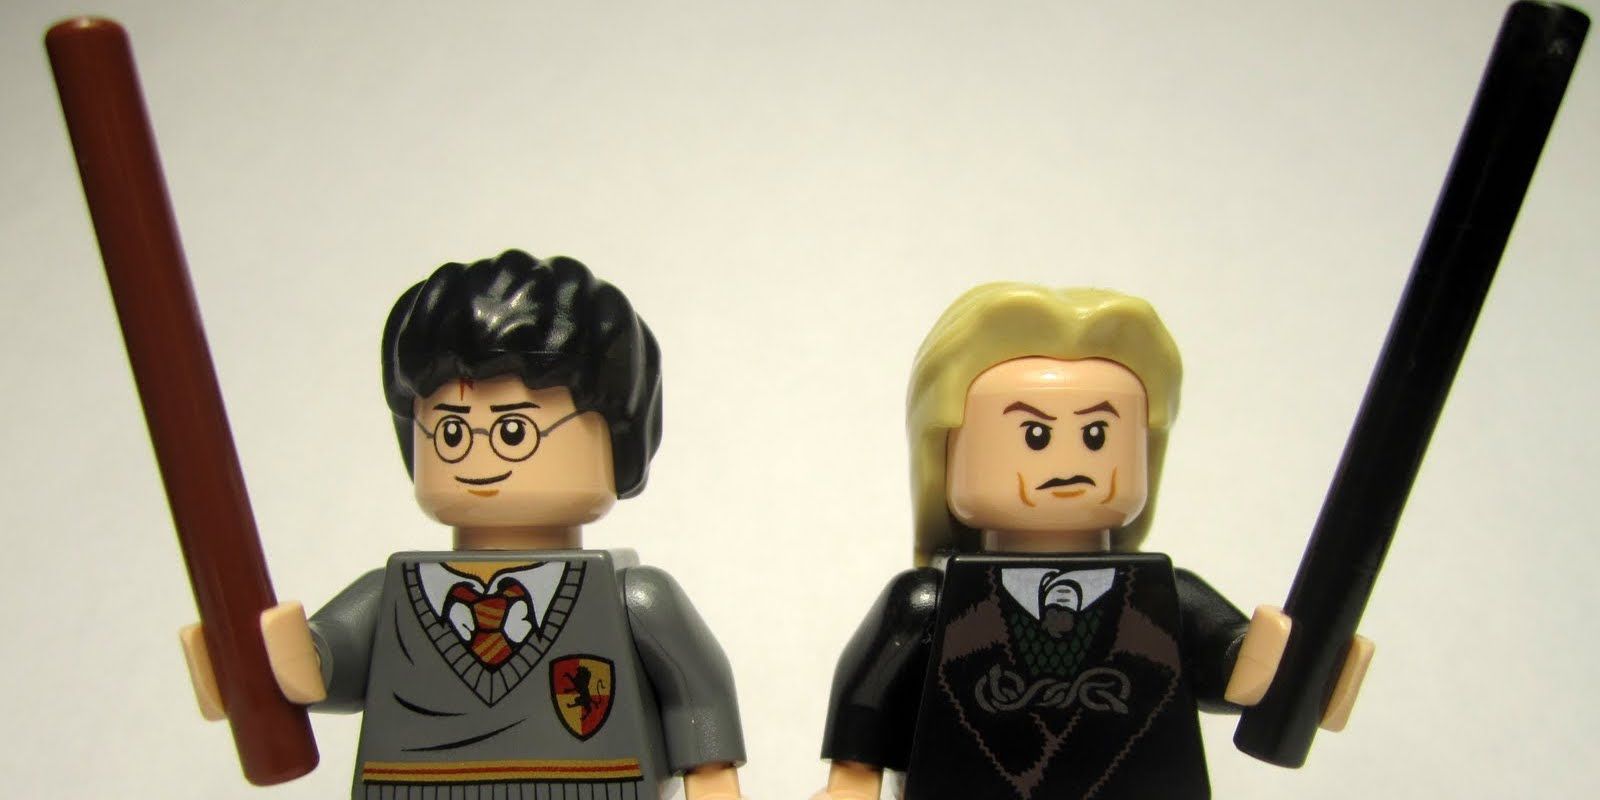 LEGO Harry Potter toys